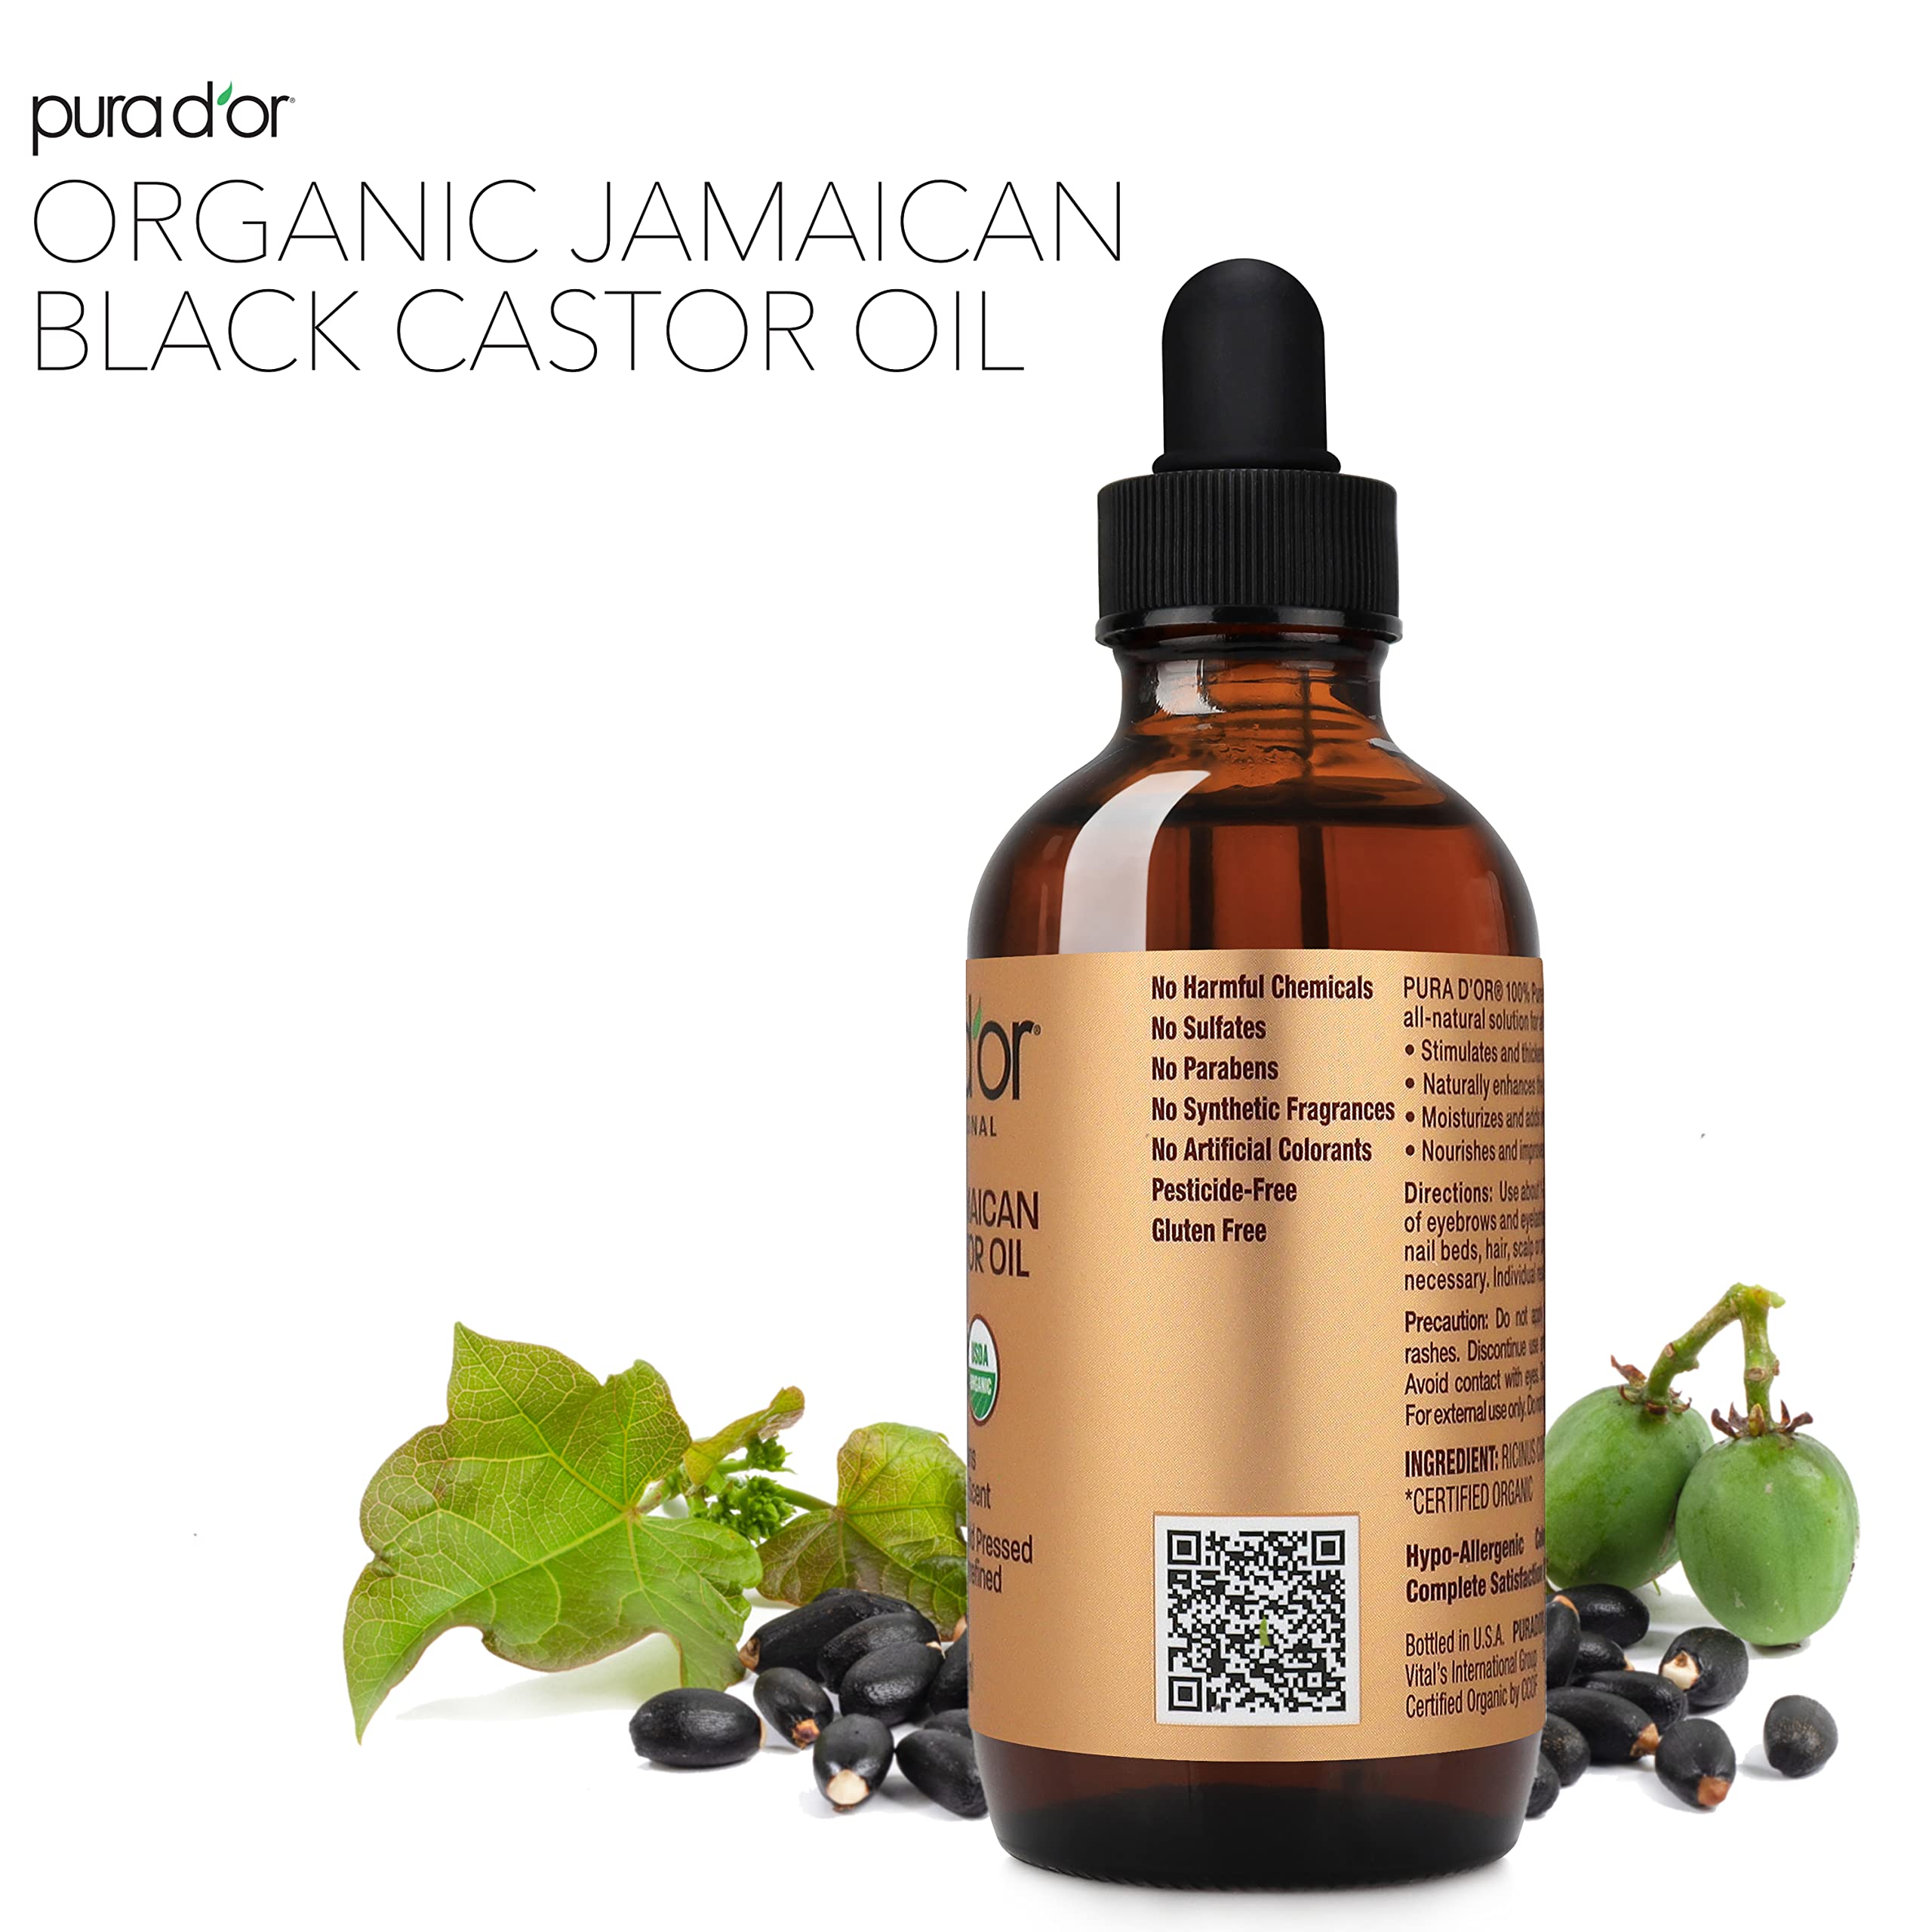 PURA D'OR 4 Oz Organic Jamaican Black Castor Oil - Natural Smoky Scent - USDA Certified, Pure, Cold Pressed & Roasted, Hexane Free Eyelash Growth Serum - 2 Empty Bonus On The Go Applicators